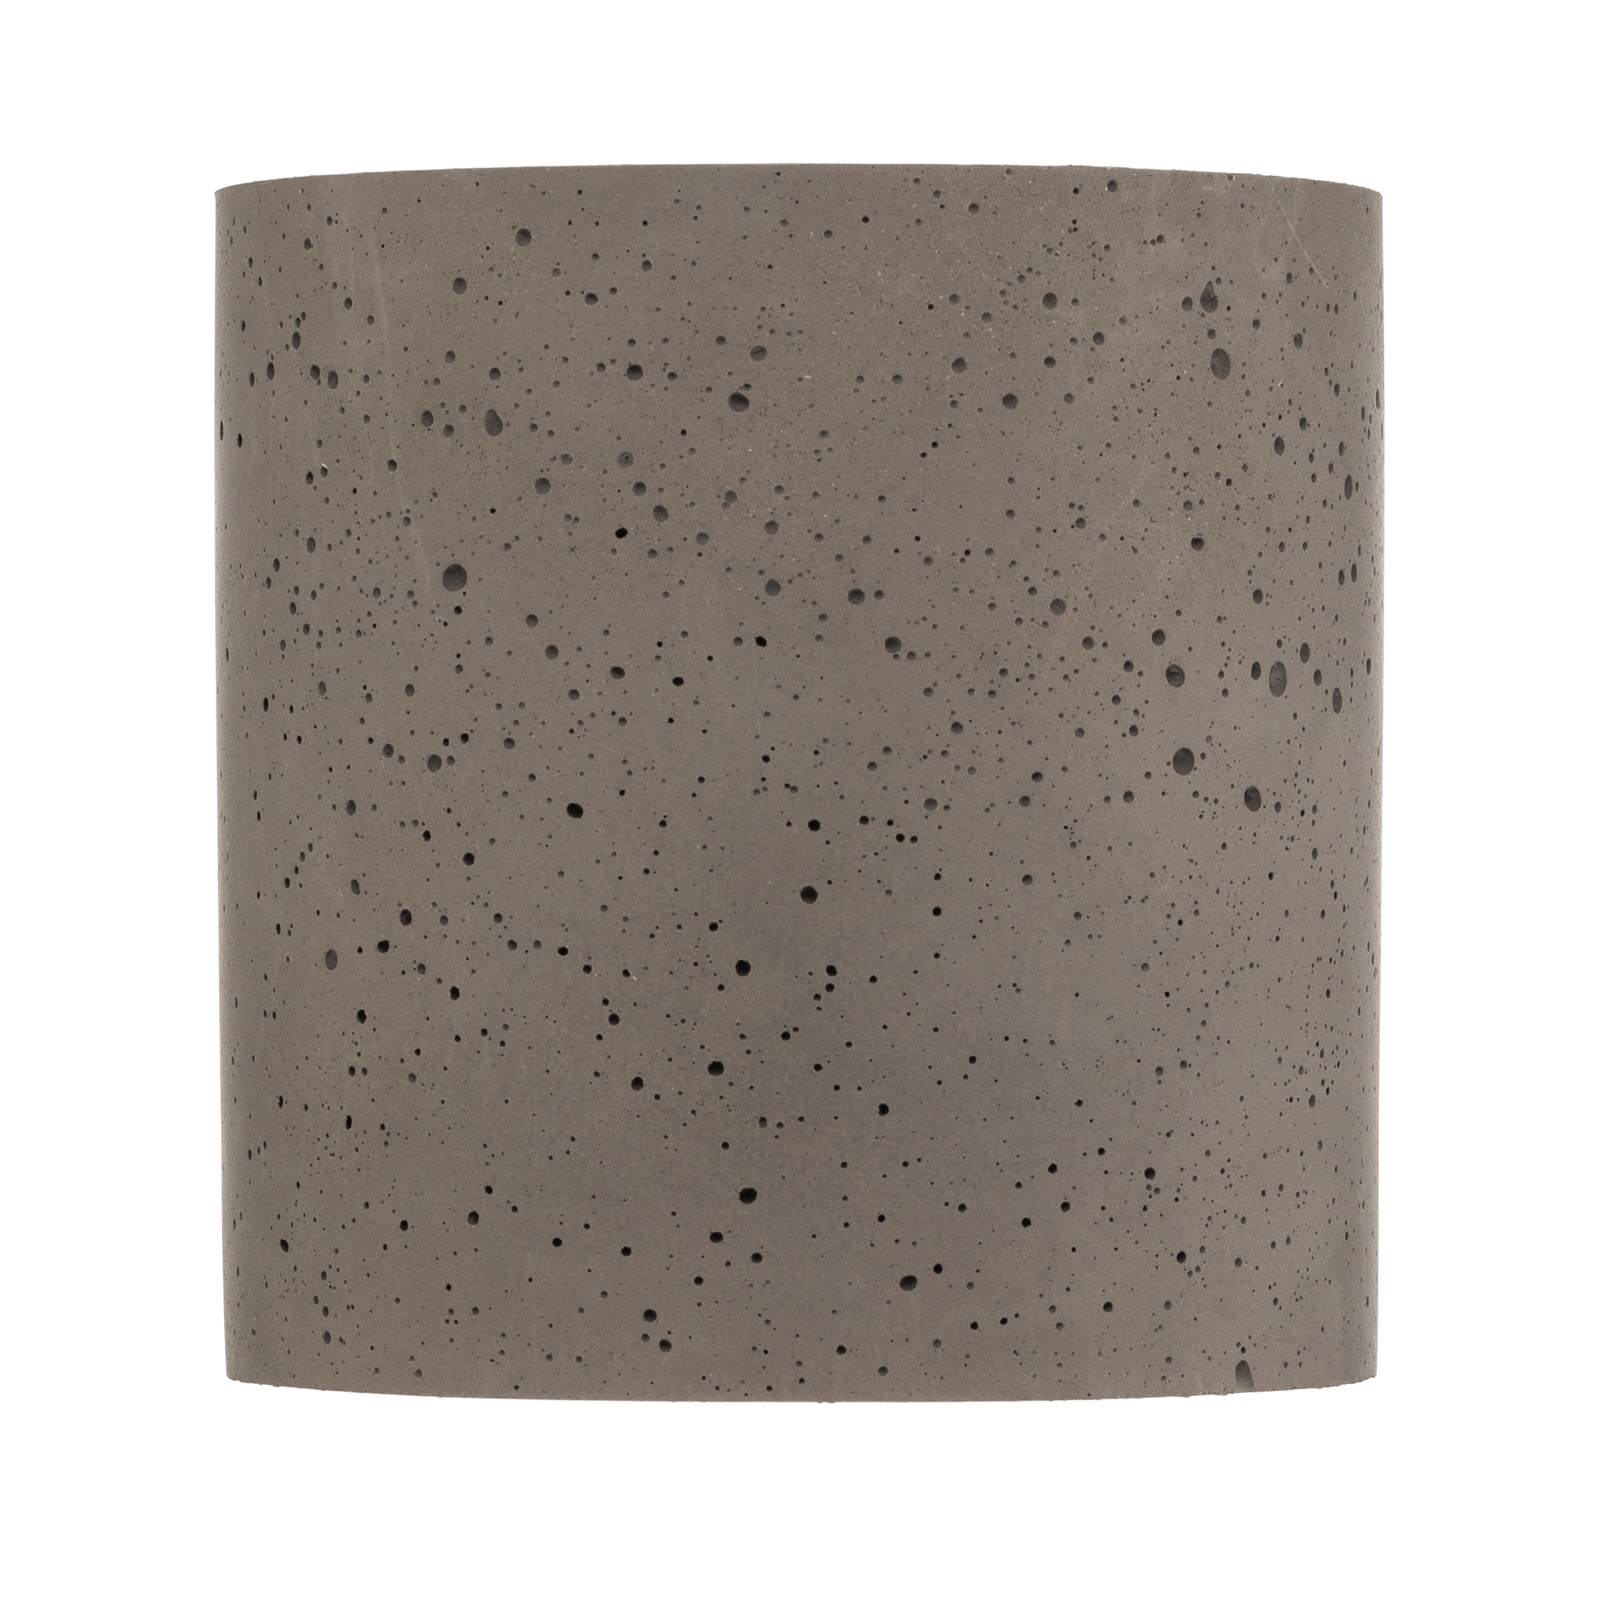 Downlight Shy M din beton, Ø 14,5 cm